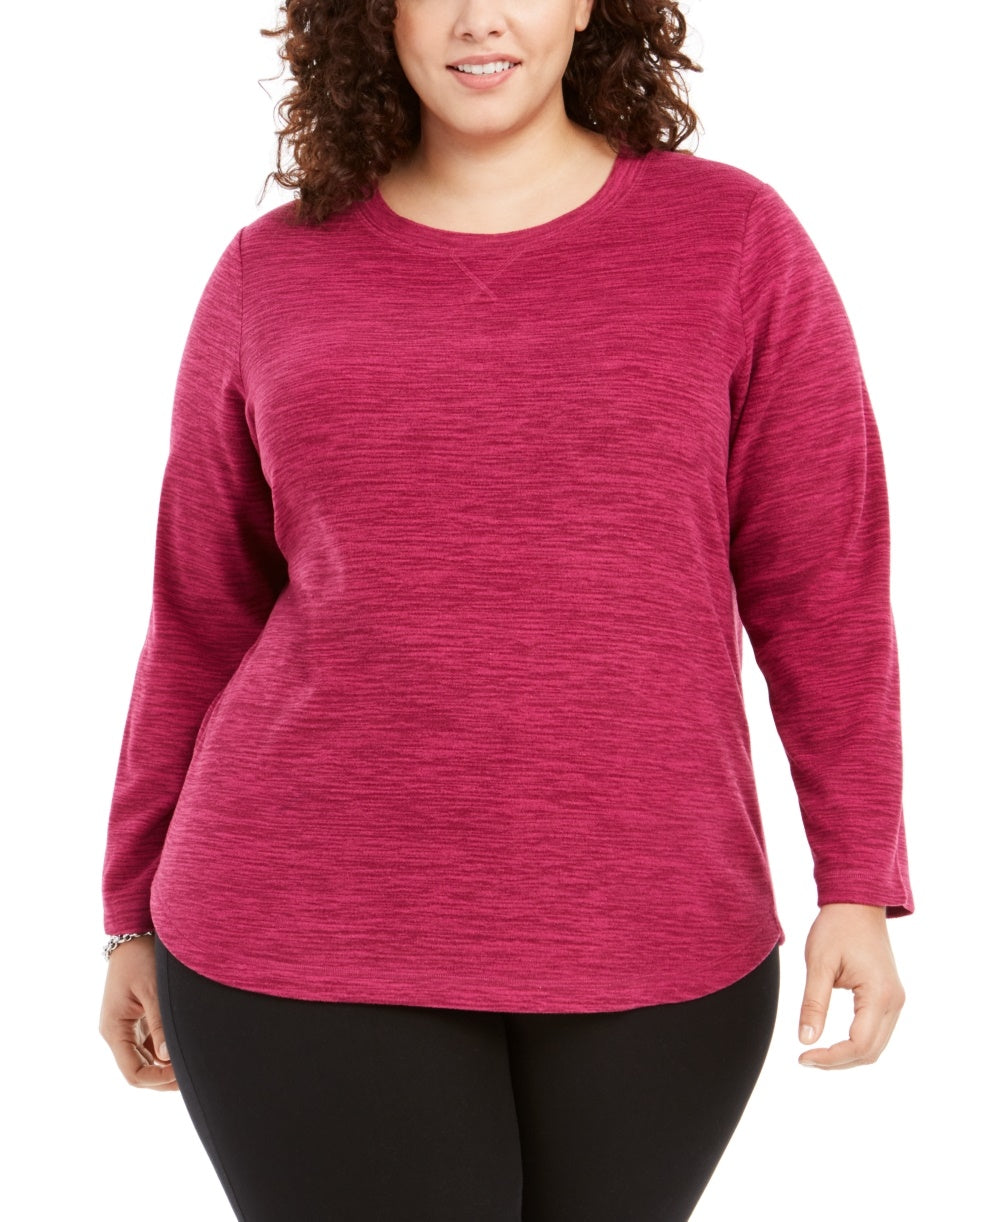 Karen Scott Women's Plus Size Marled Microfleece Top Purple Size 0X